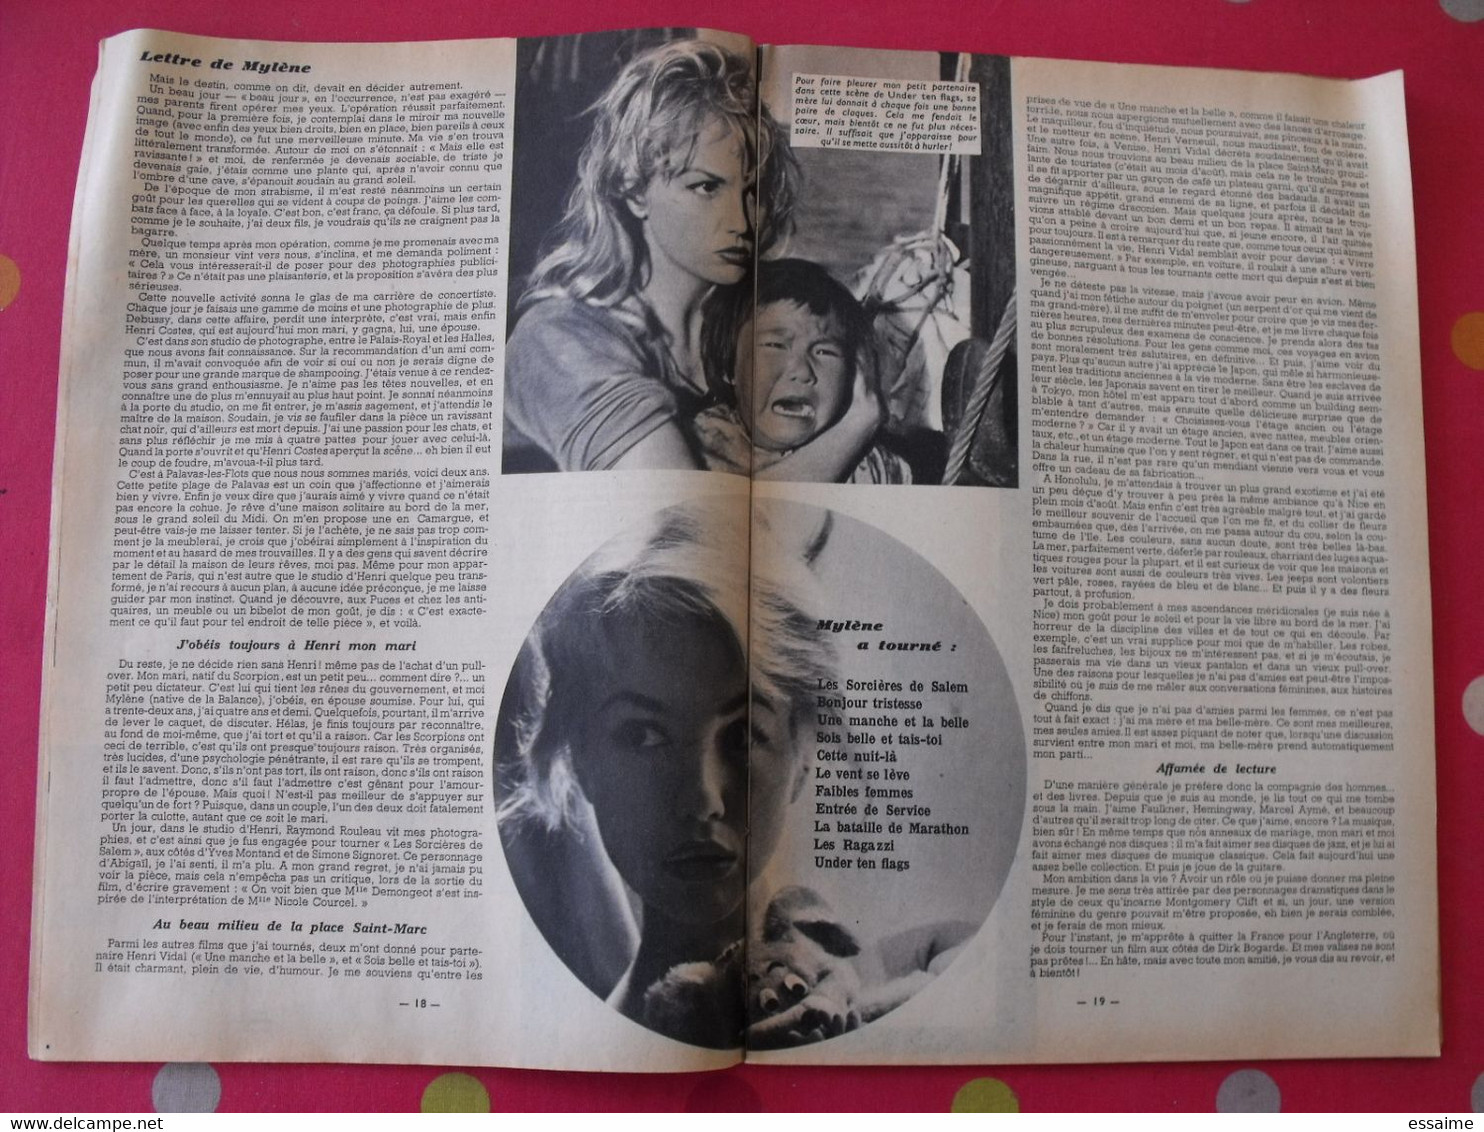 revue Jeunesse cinéma n° 31 de 1960. belmondo dany carrel maurice ronet marylin monroe montand michèle morgan